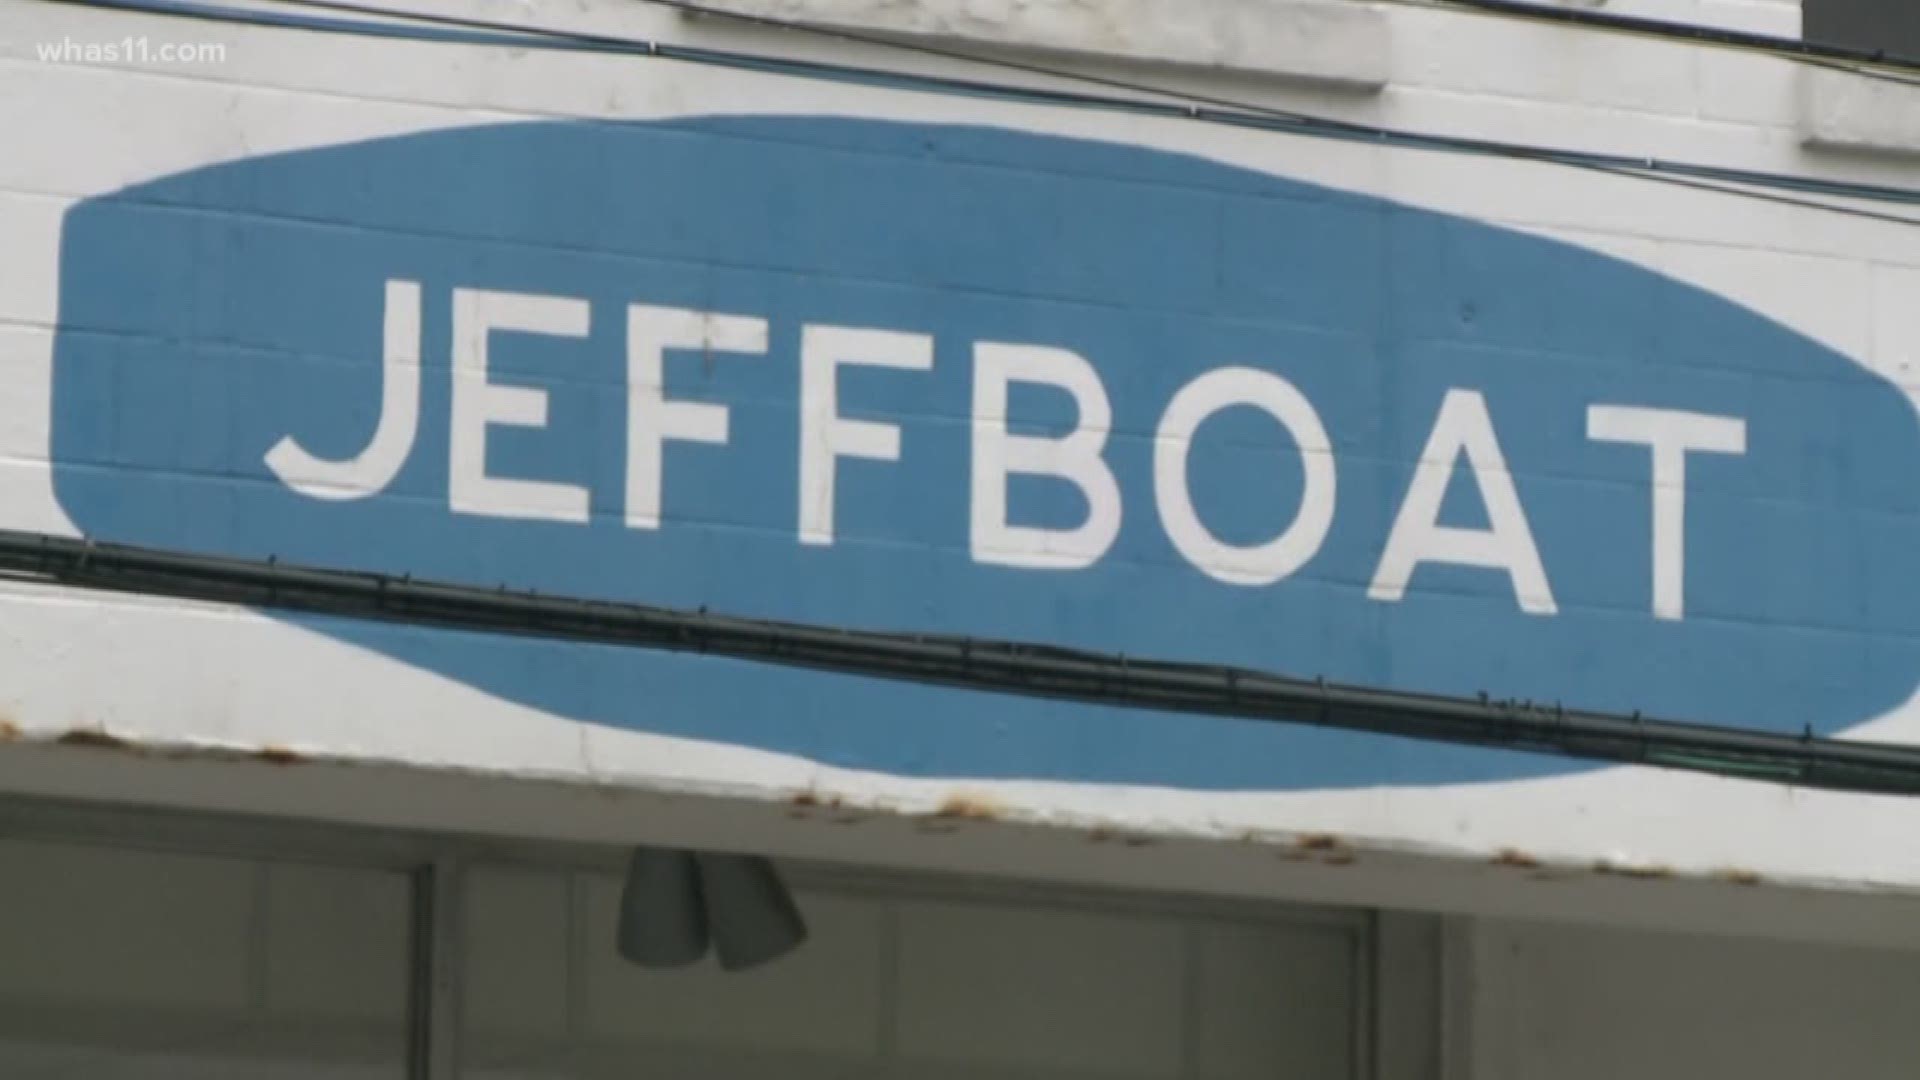 Jeffboat's last barge hits the Ohio